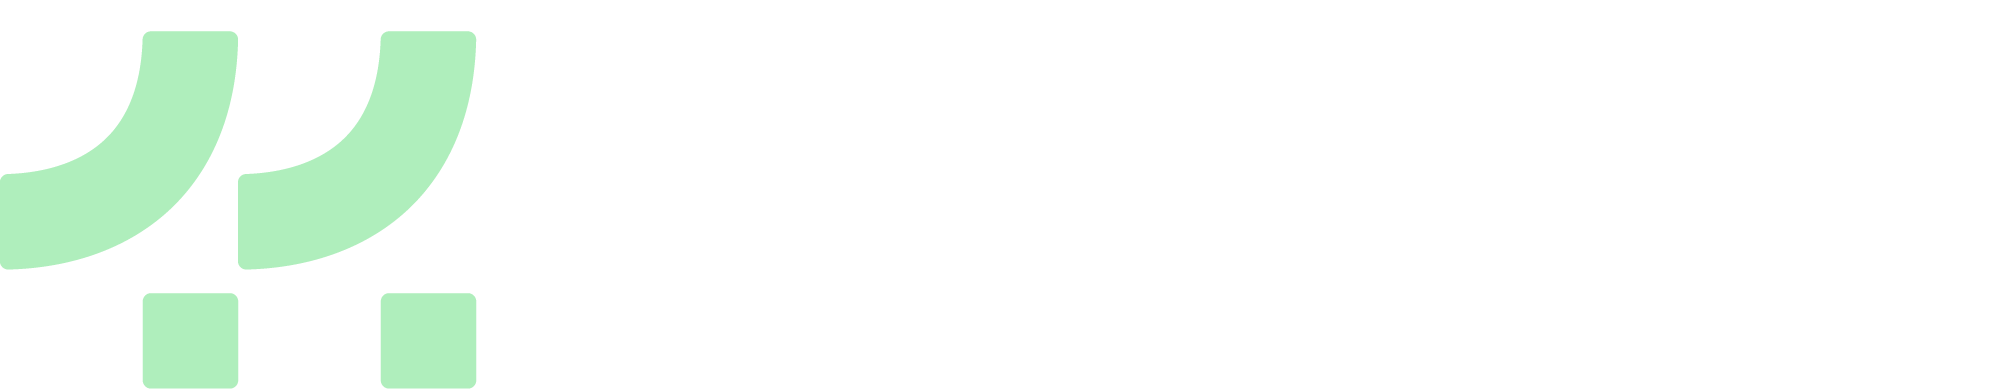 Eleven logo